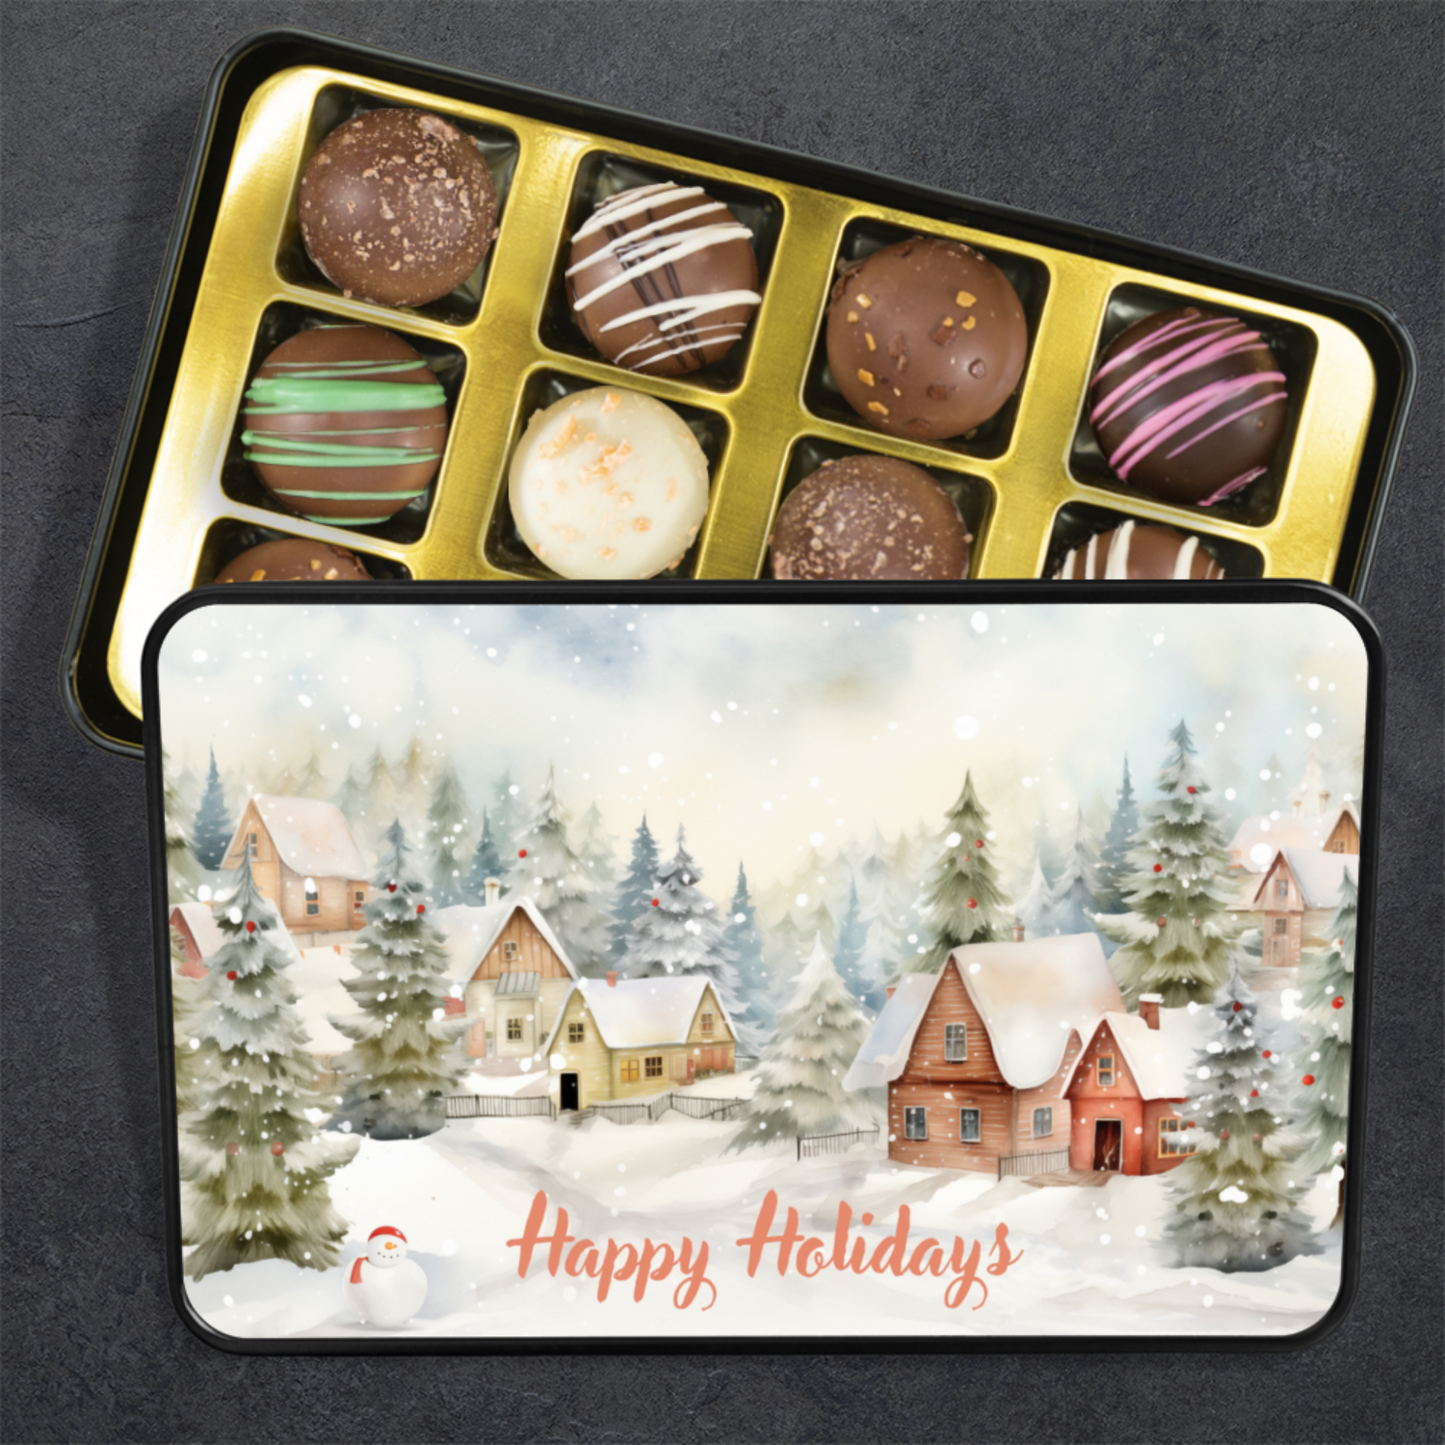 Christmas Happy Holidays Chocolate Truffles Gift Box, Christmas Keepsake, Chocolate Gift